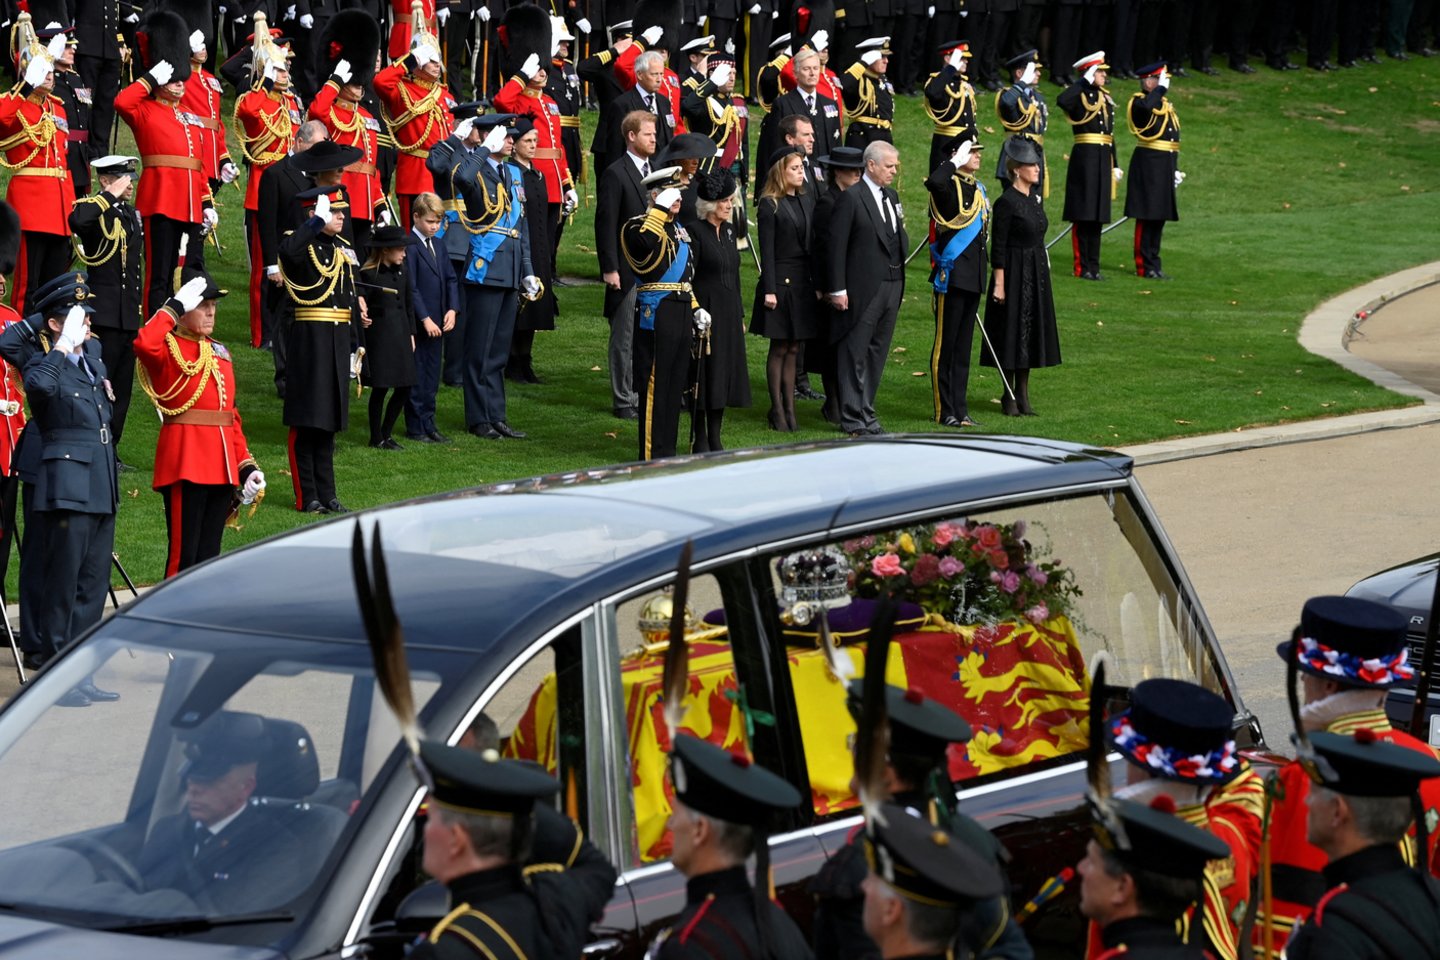 Karalienės Elizabeth II karstas išlydimas valstybiniu katafalku.<br>Reuters/Scanpix nuotr.